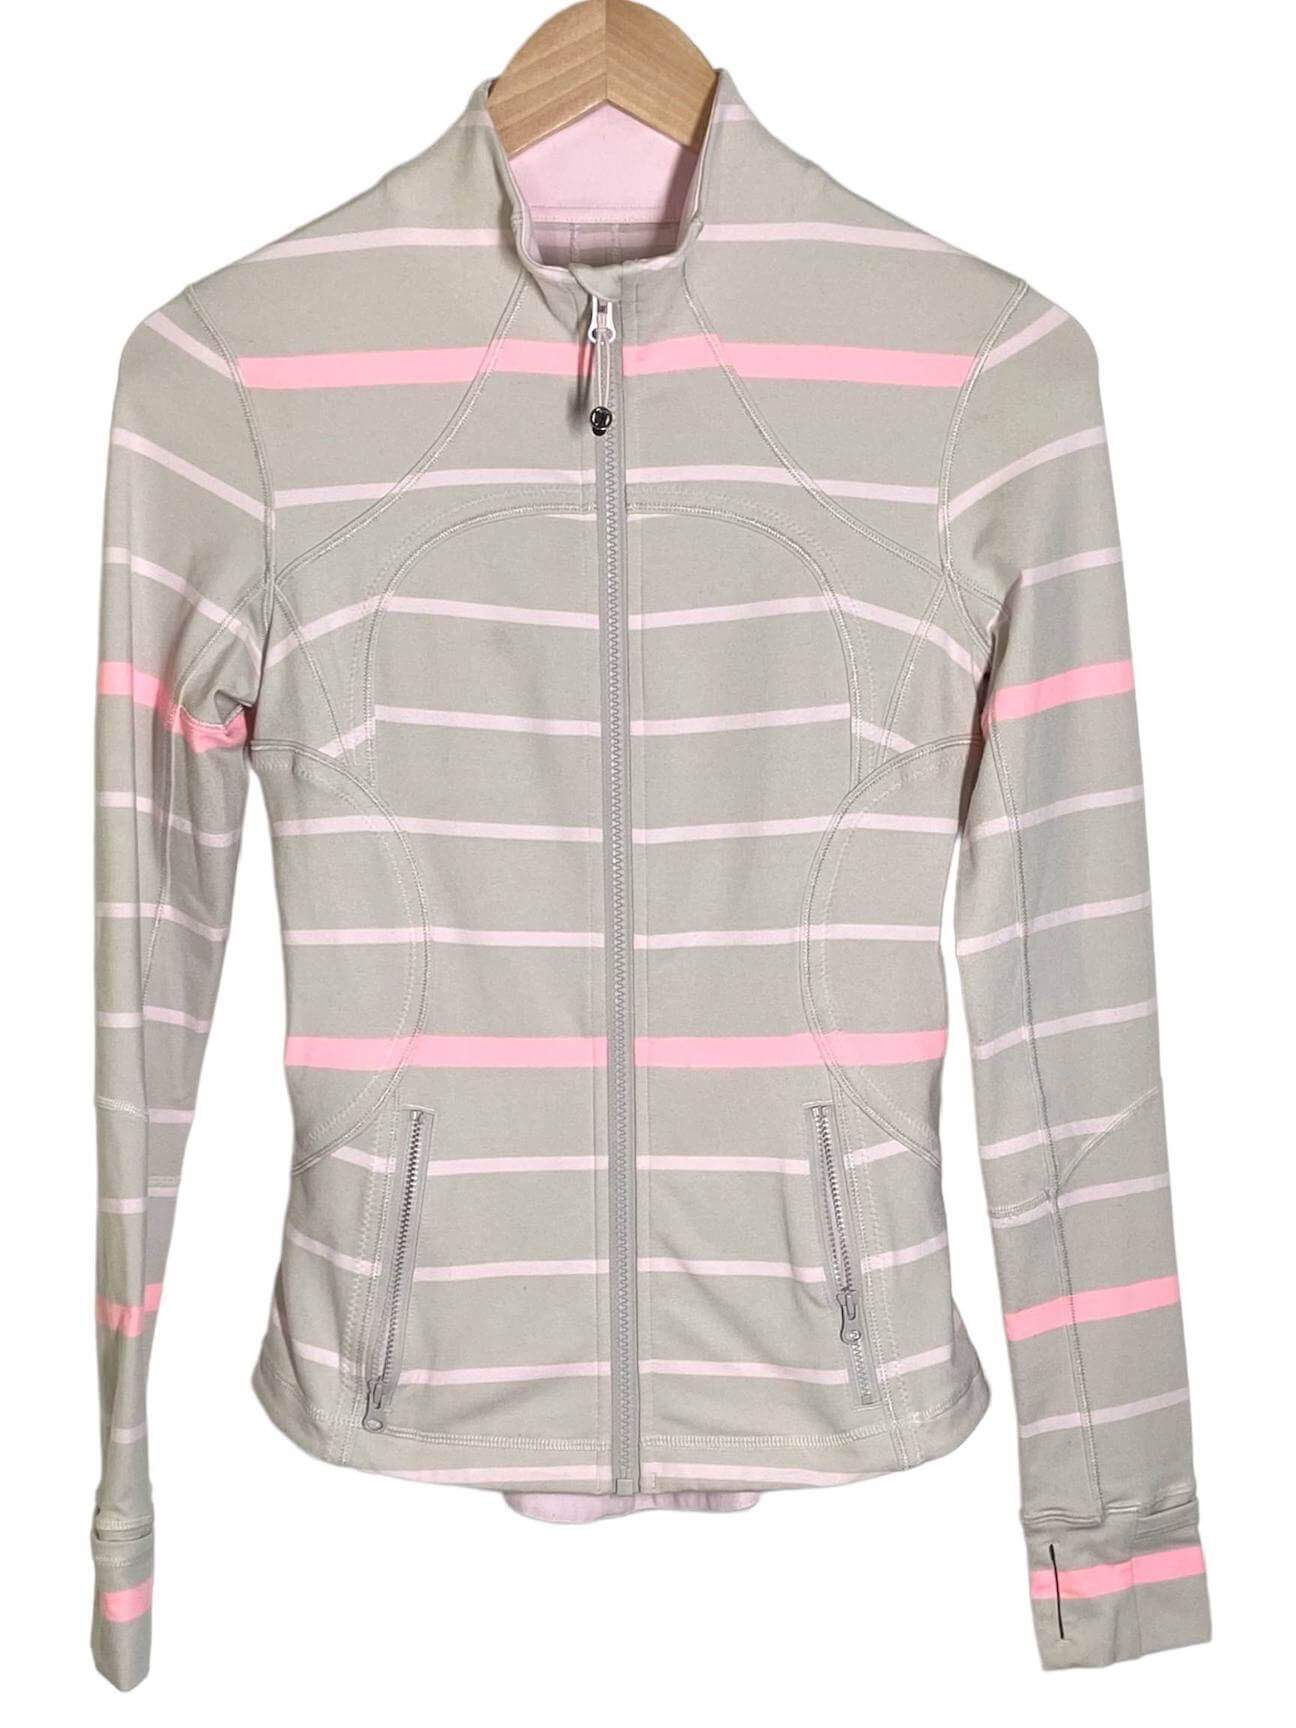 Light Spring LULULEMON small pink stripe jacket